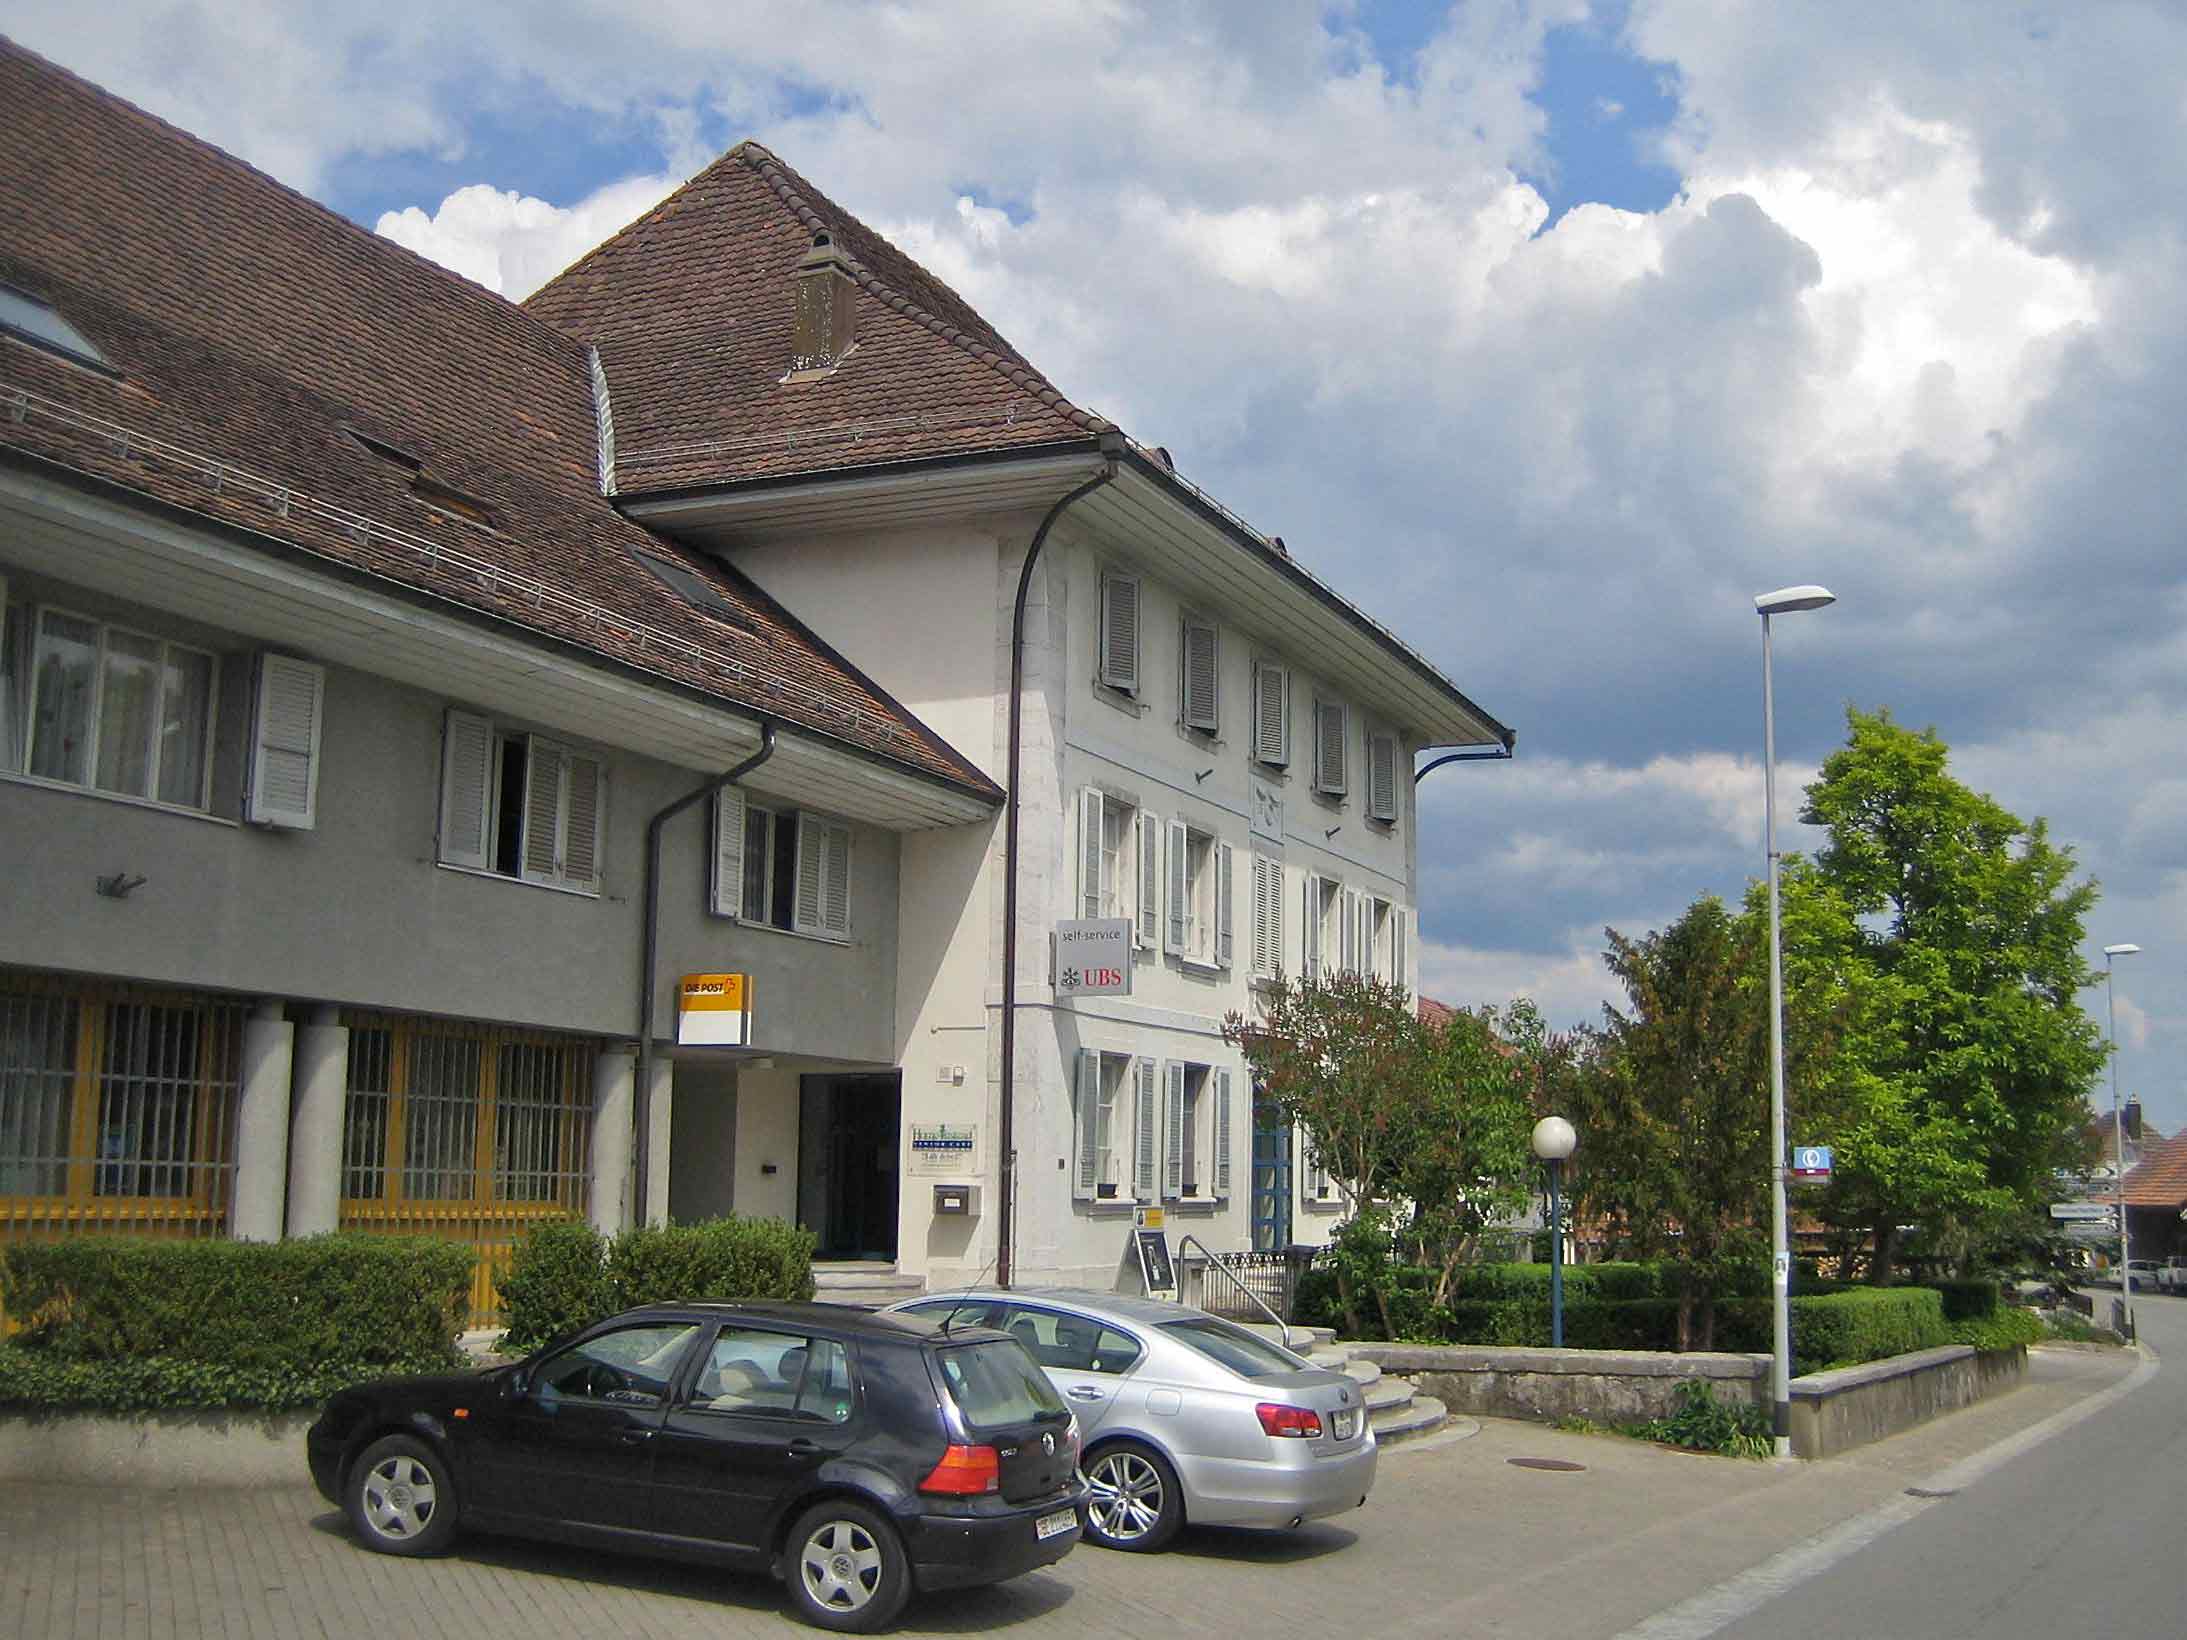 Das alte Doktorhaus (Haus Gugelmann)